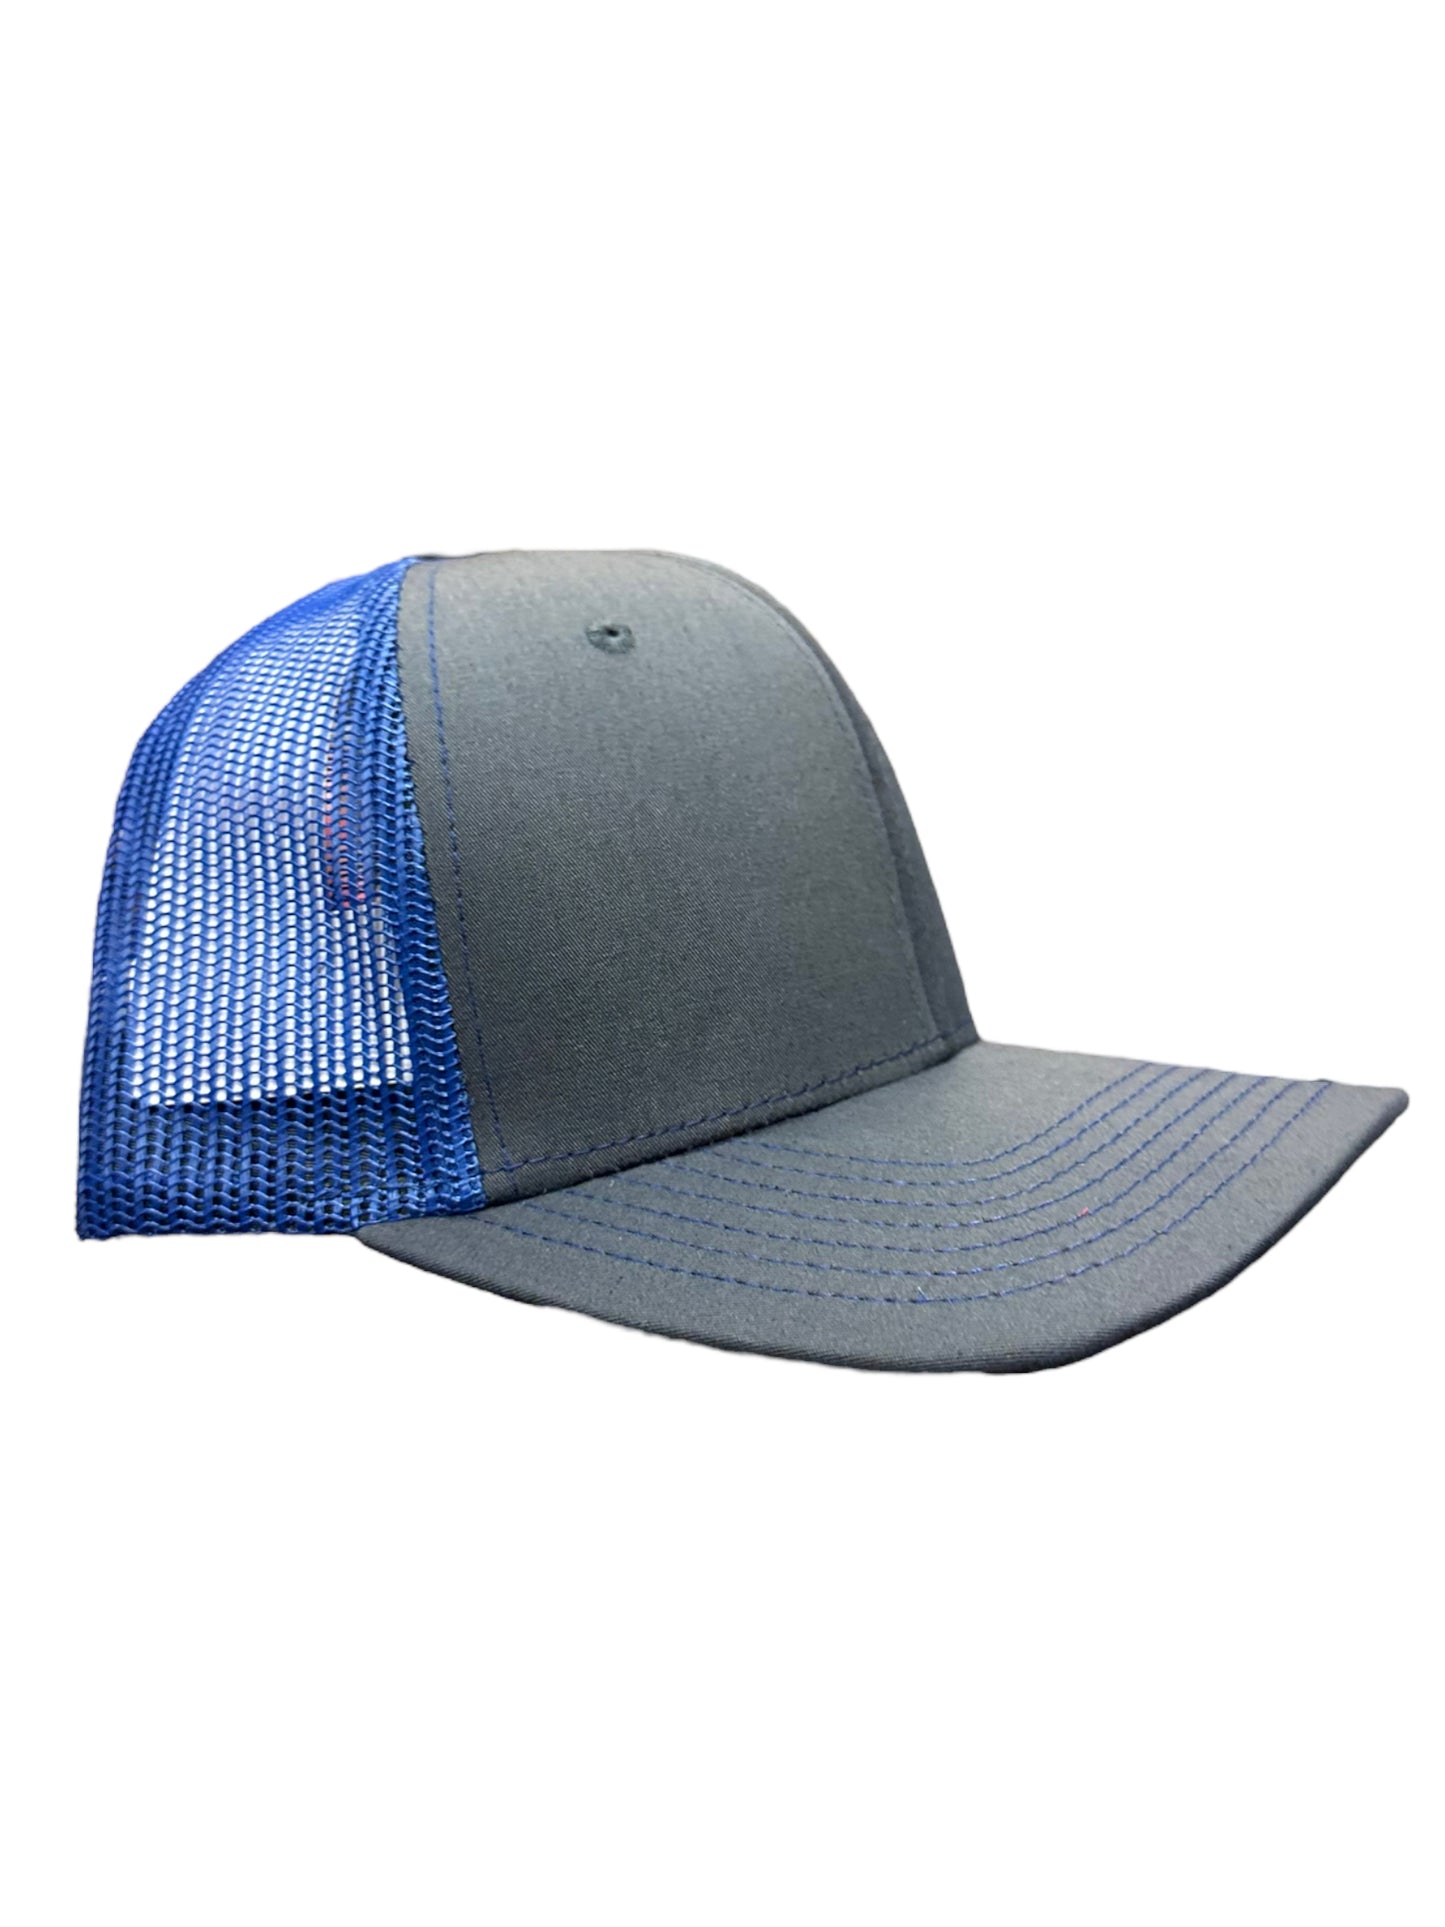 Grey and blue mesh trucker SnapBack hats